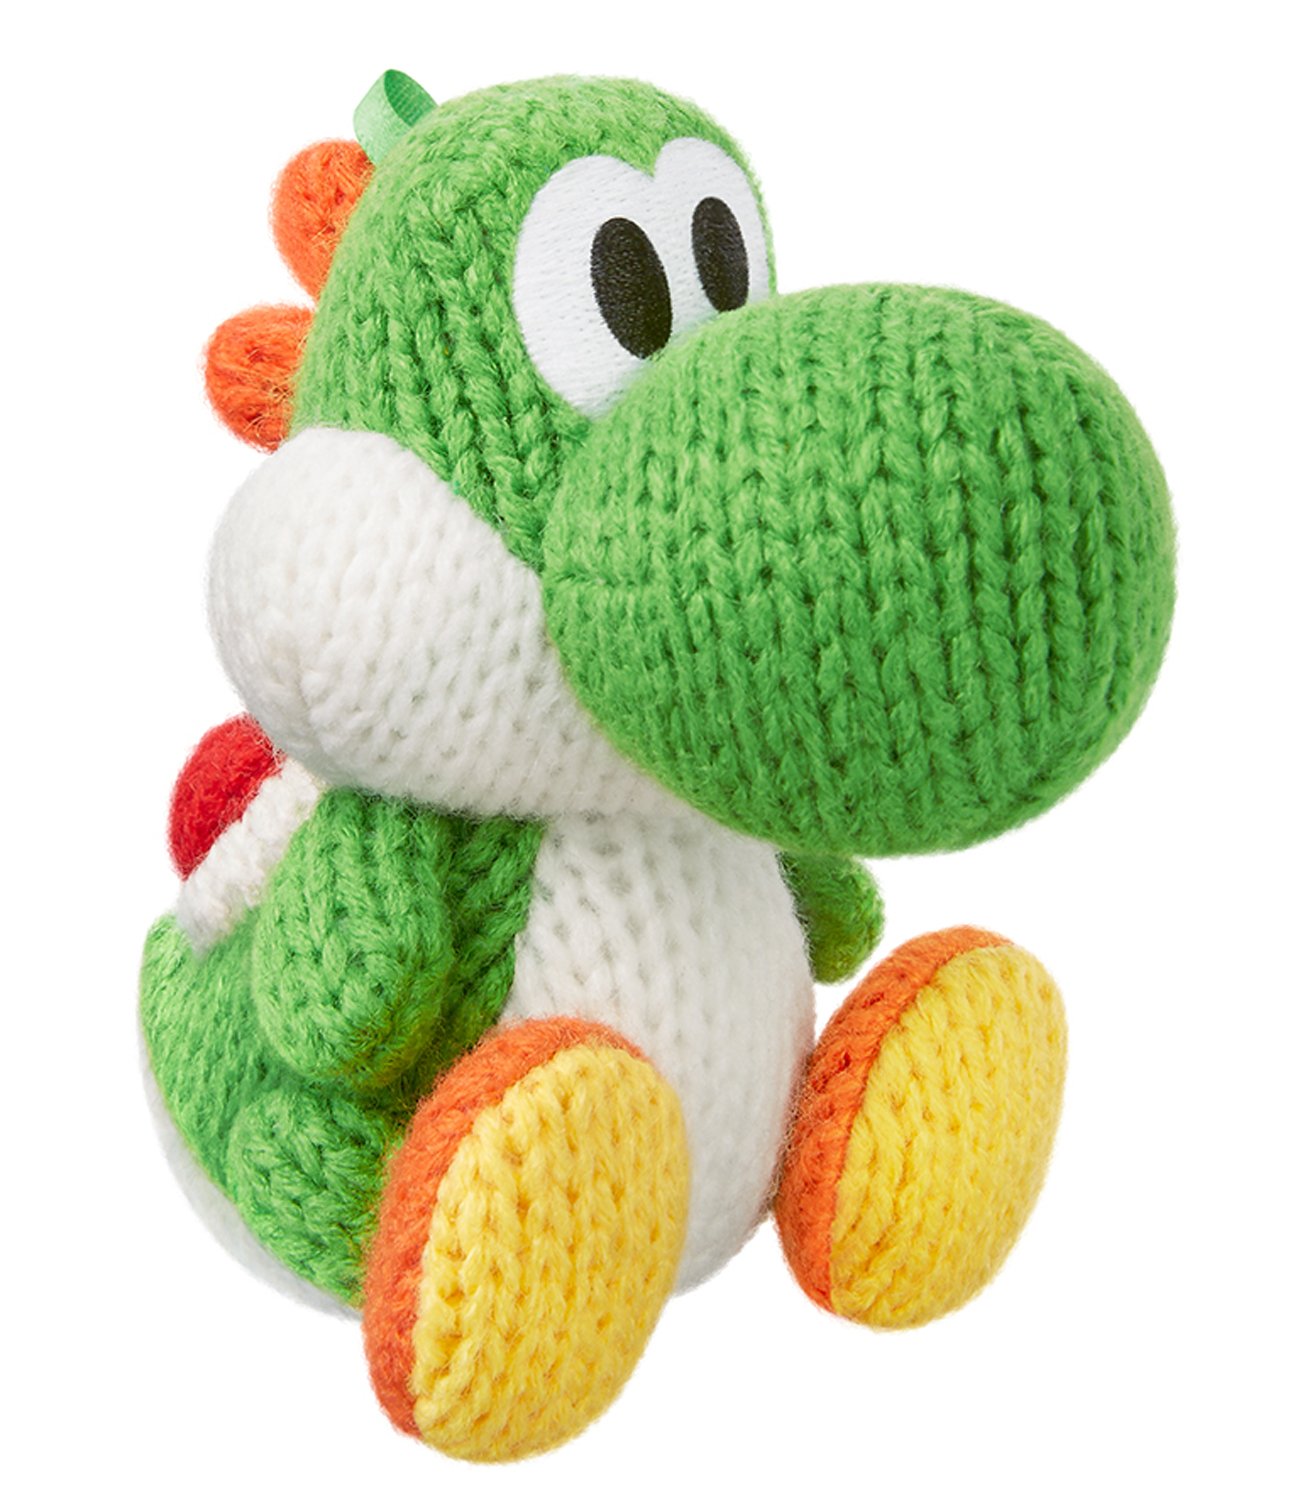 Green Yarn Yoshi Amiibo Yoshi's Woolly World Series (Nintendo Switch)